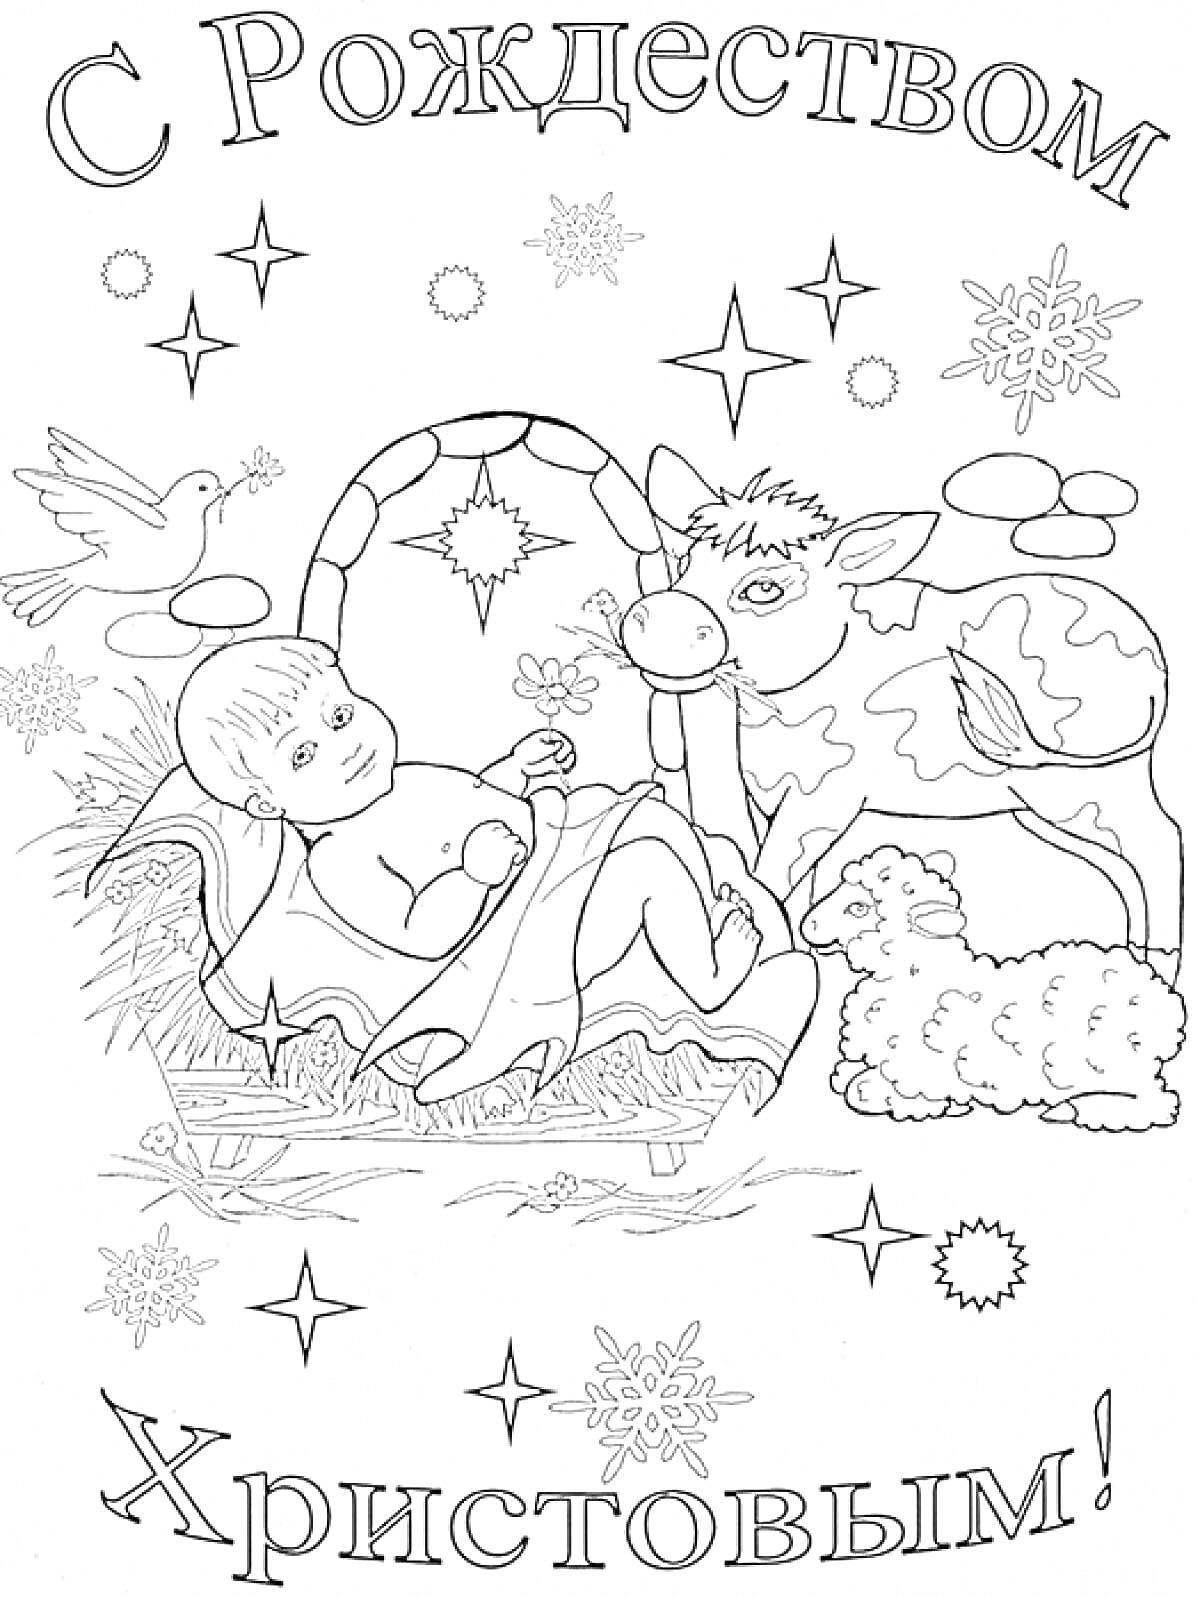 На раскраске изображено: Рождество, Младенец Иисус, Ясли, Осел, Звезды, Снежинки, Вертеп, Голуби, Овечки, Праздники